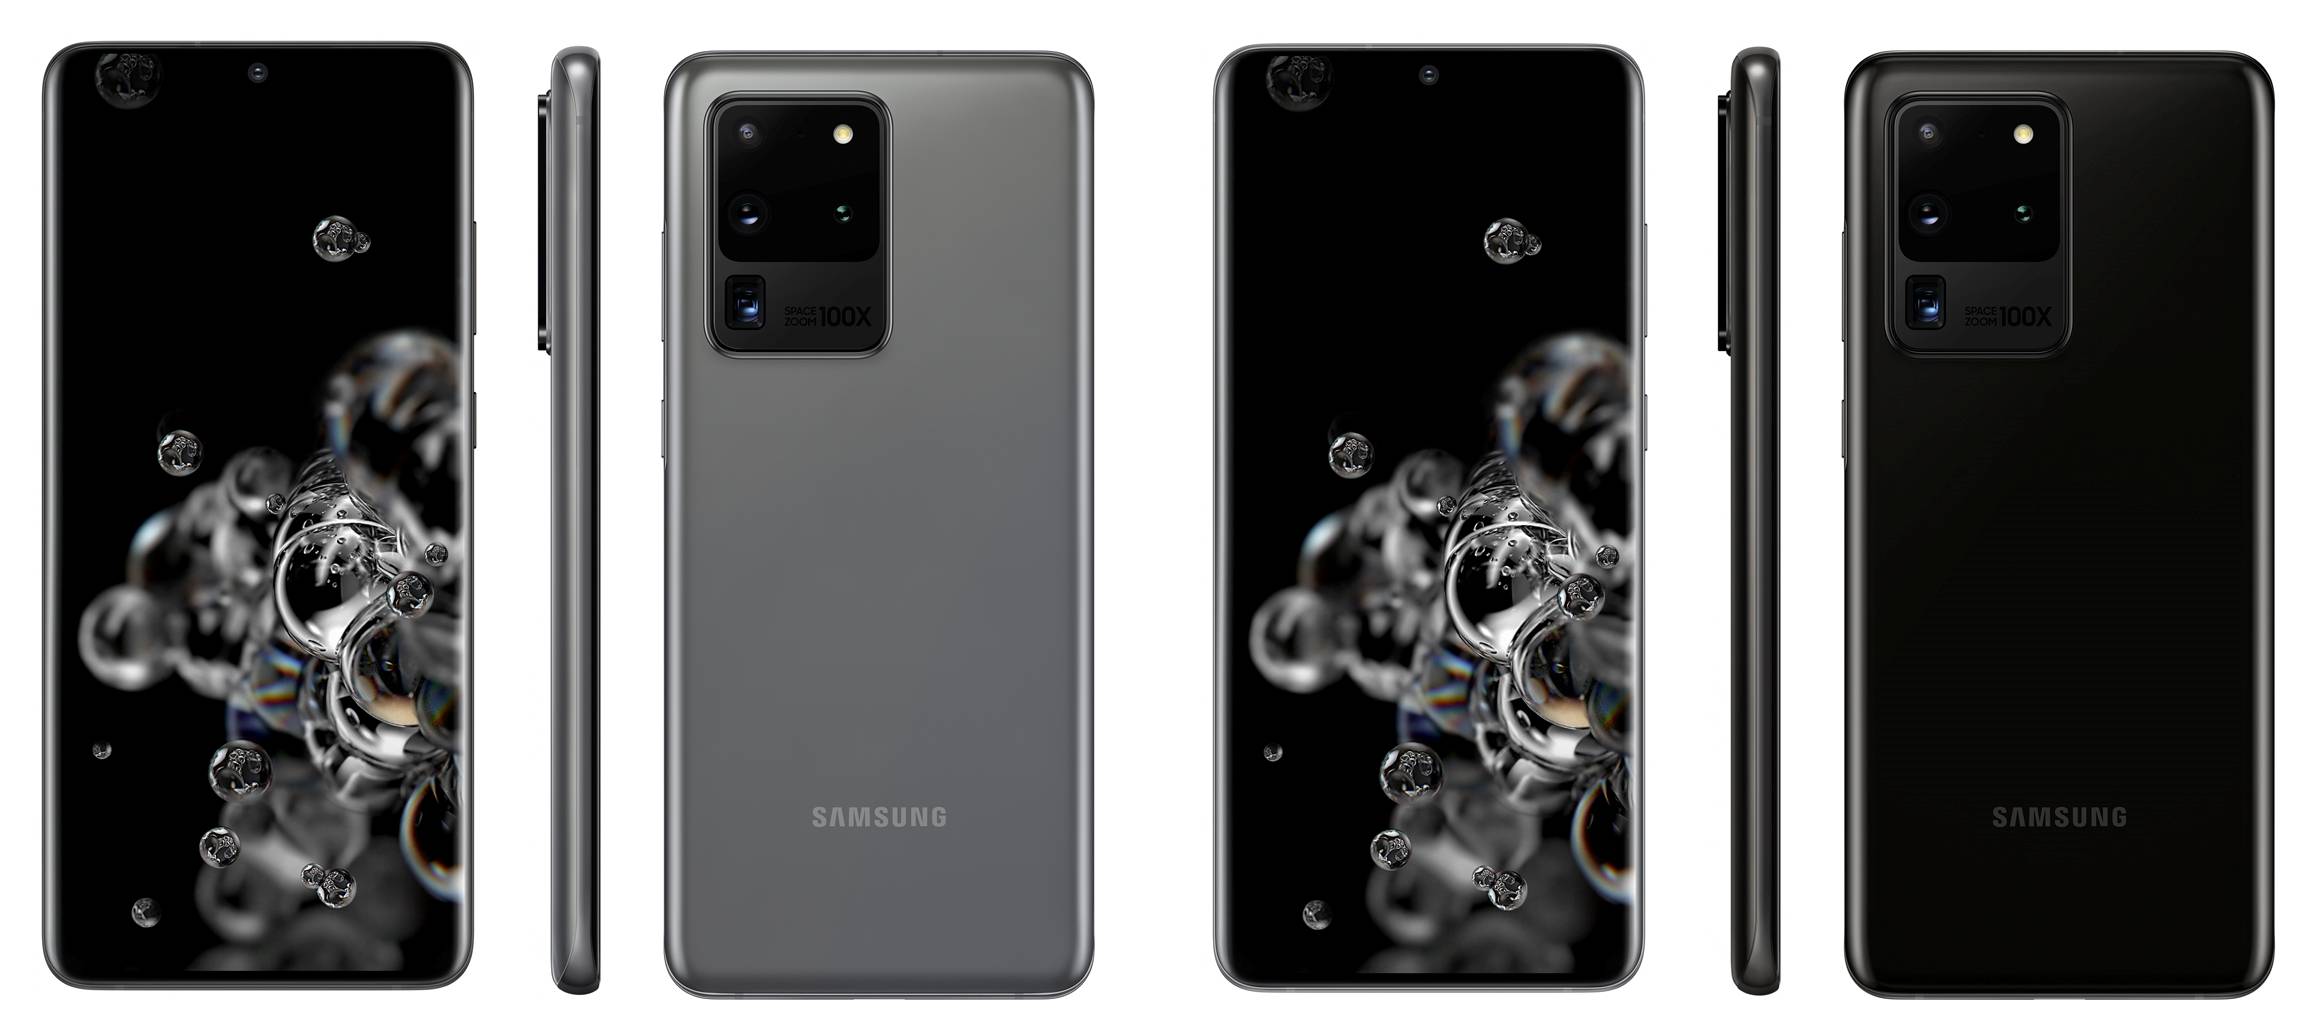 Samsung GALAXY S20 Ultra officiële persfoto's